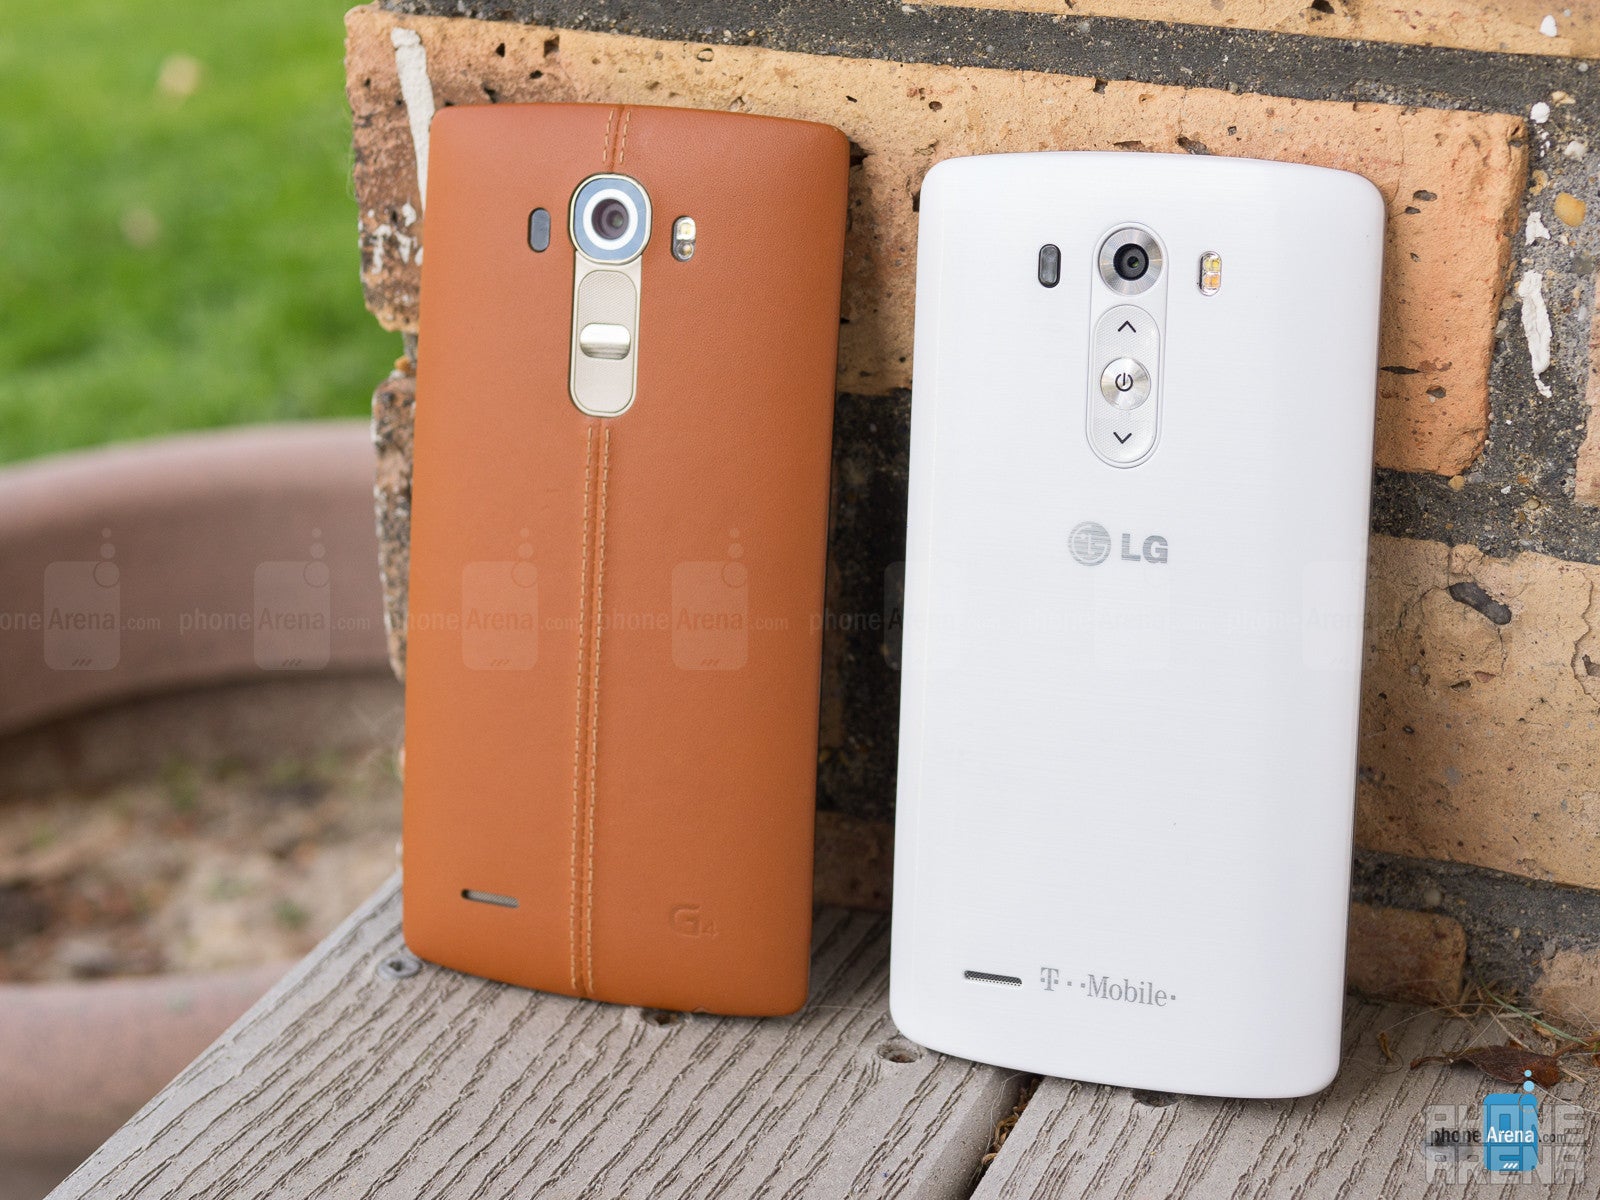 LG G4 vs LG G3